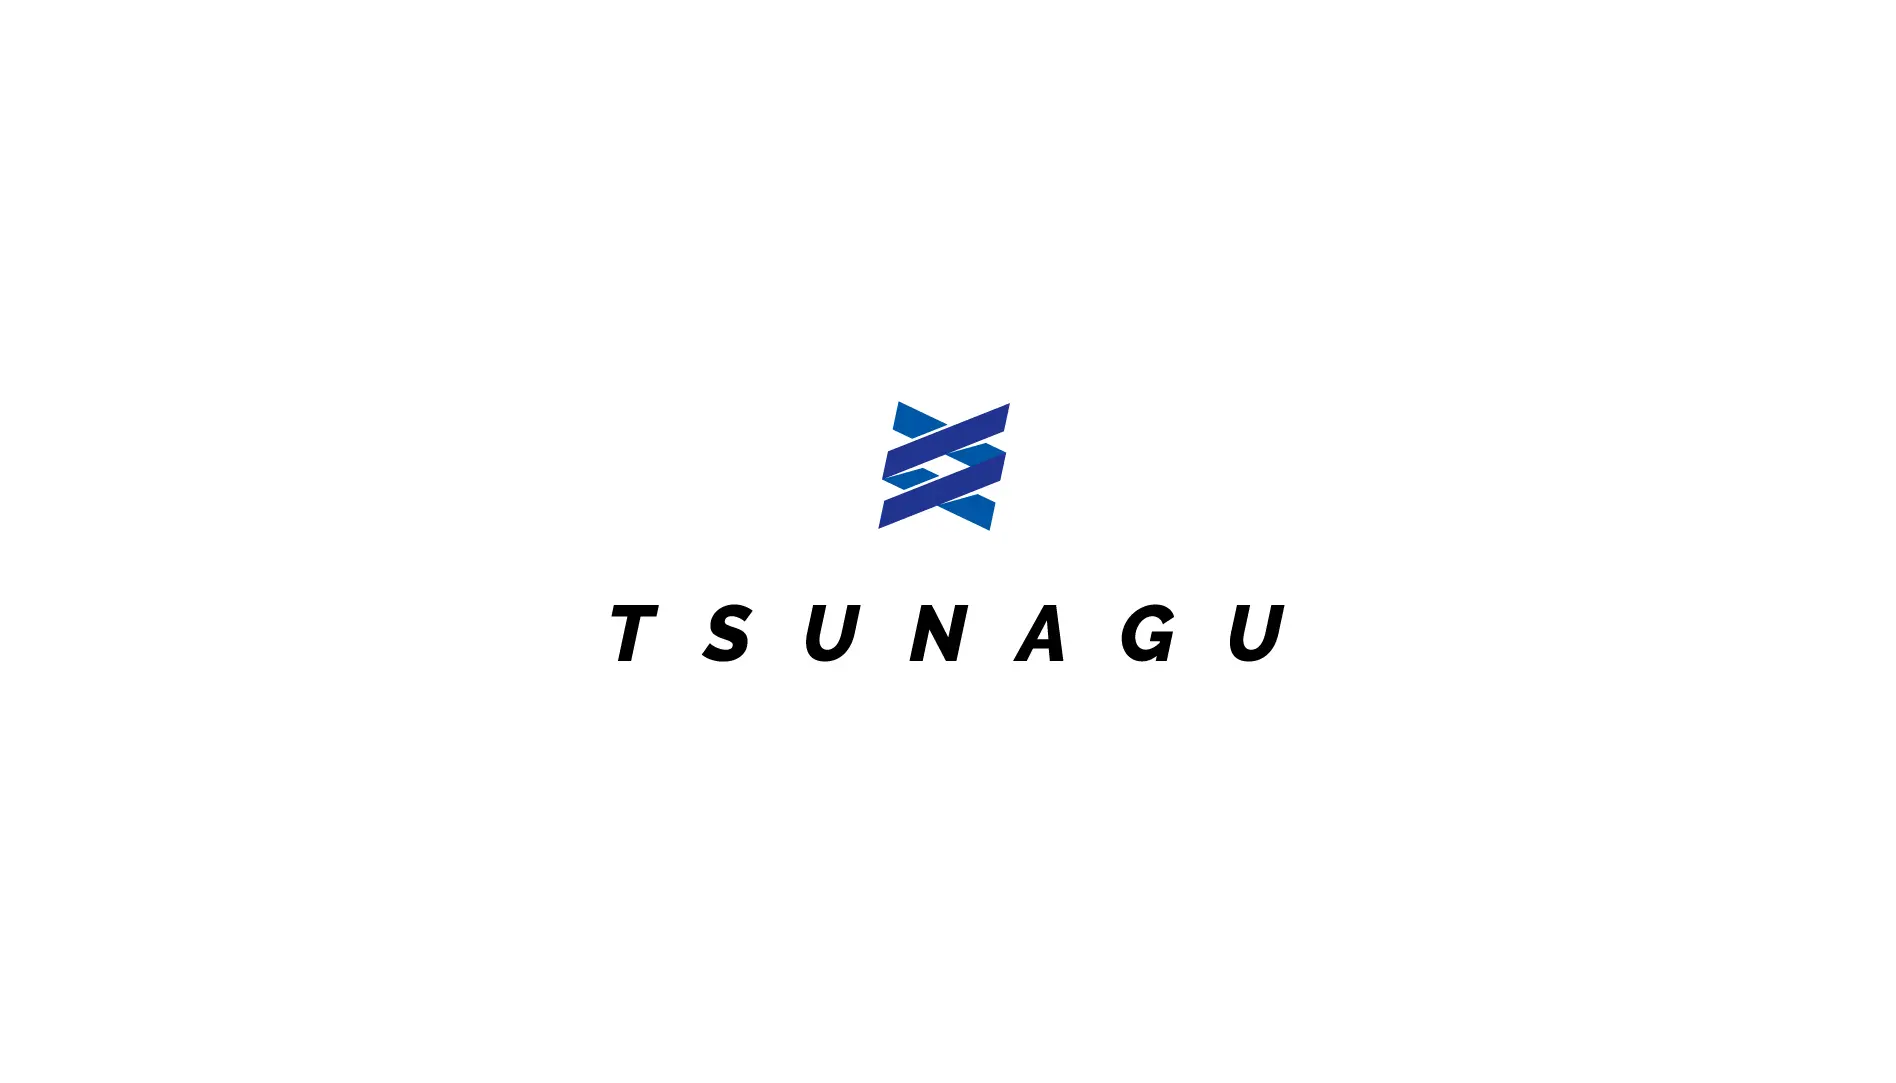 TSUNAGUブランディングデザイン